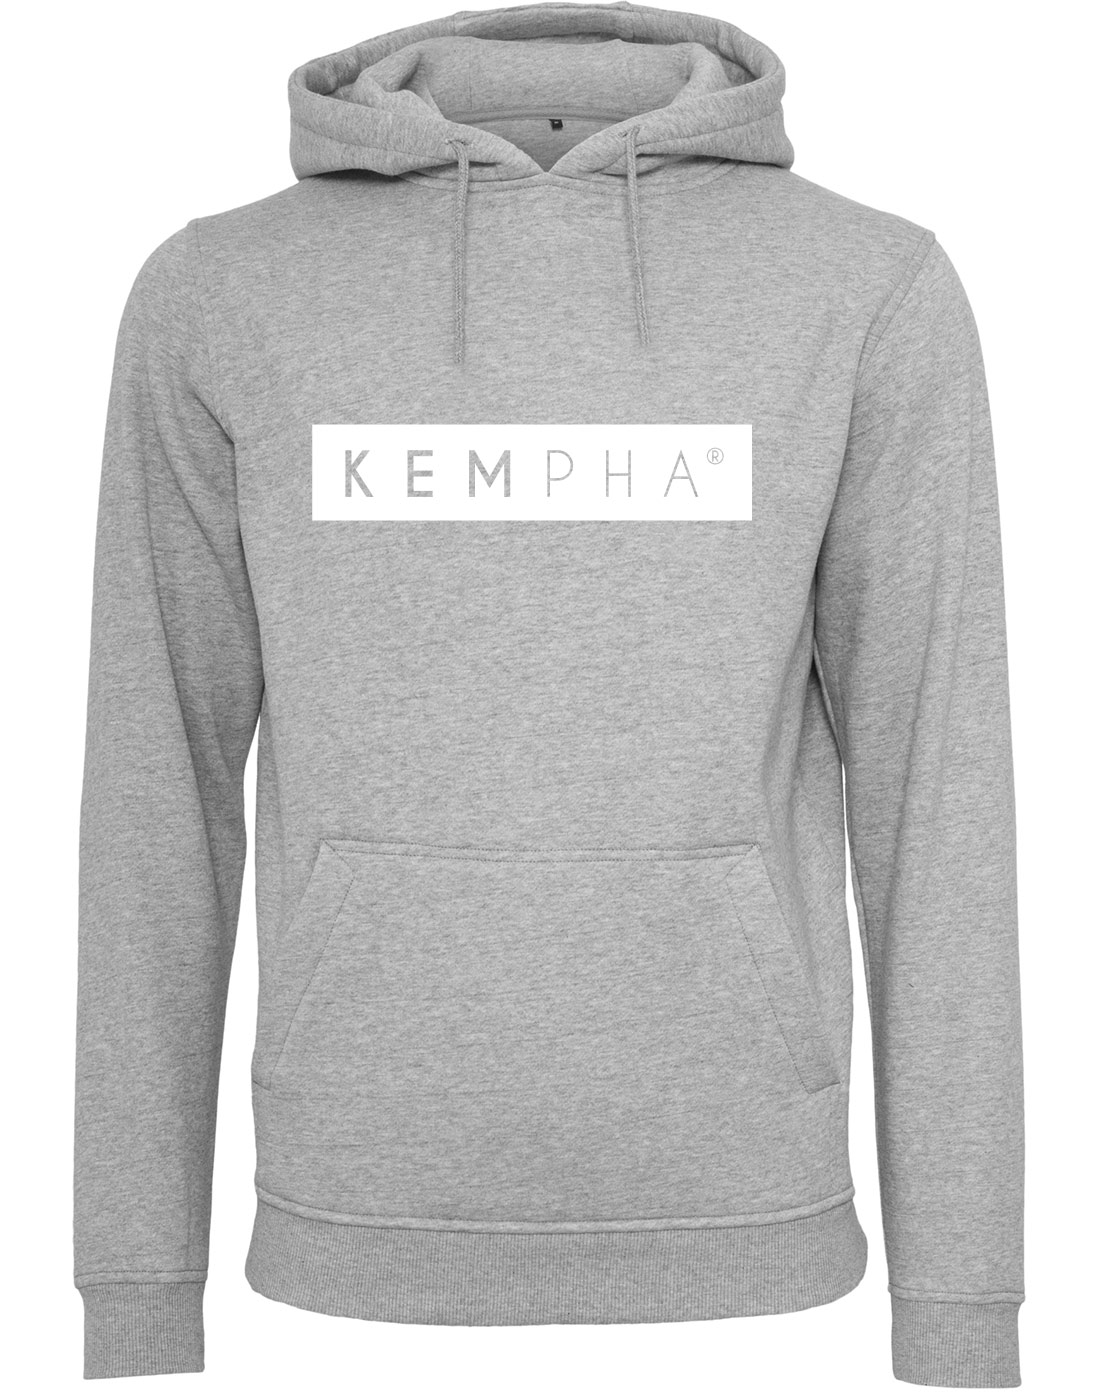 Kempha Premium Hoodie white auf heathergrey